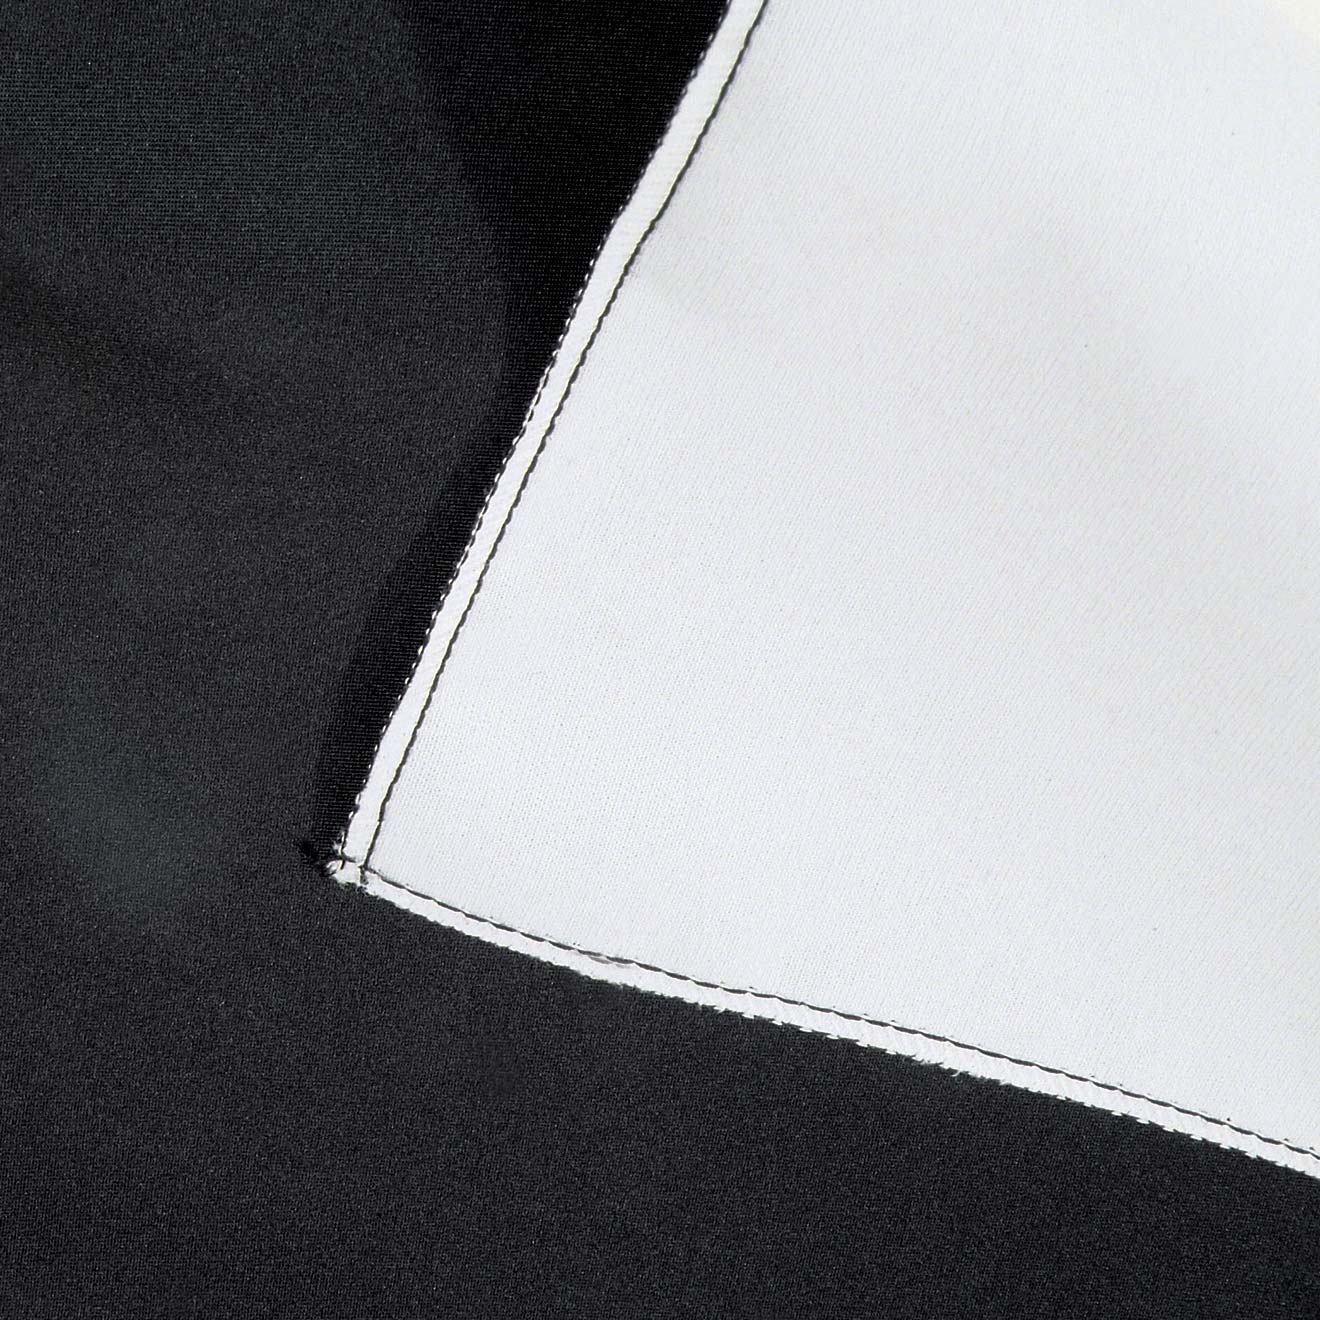 Black / White Background - Micro - Mark Electronics